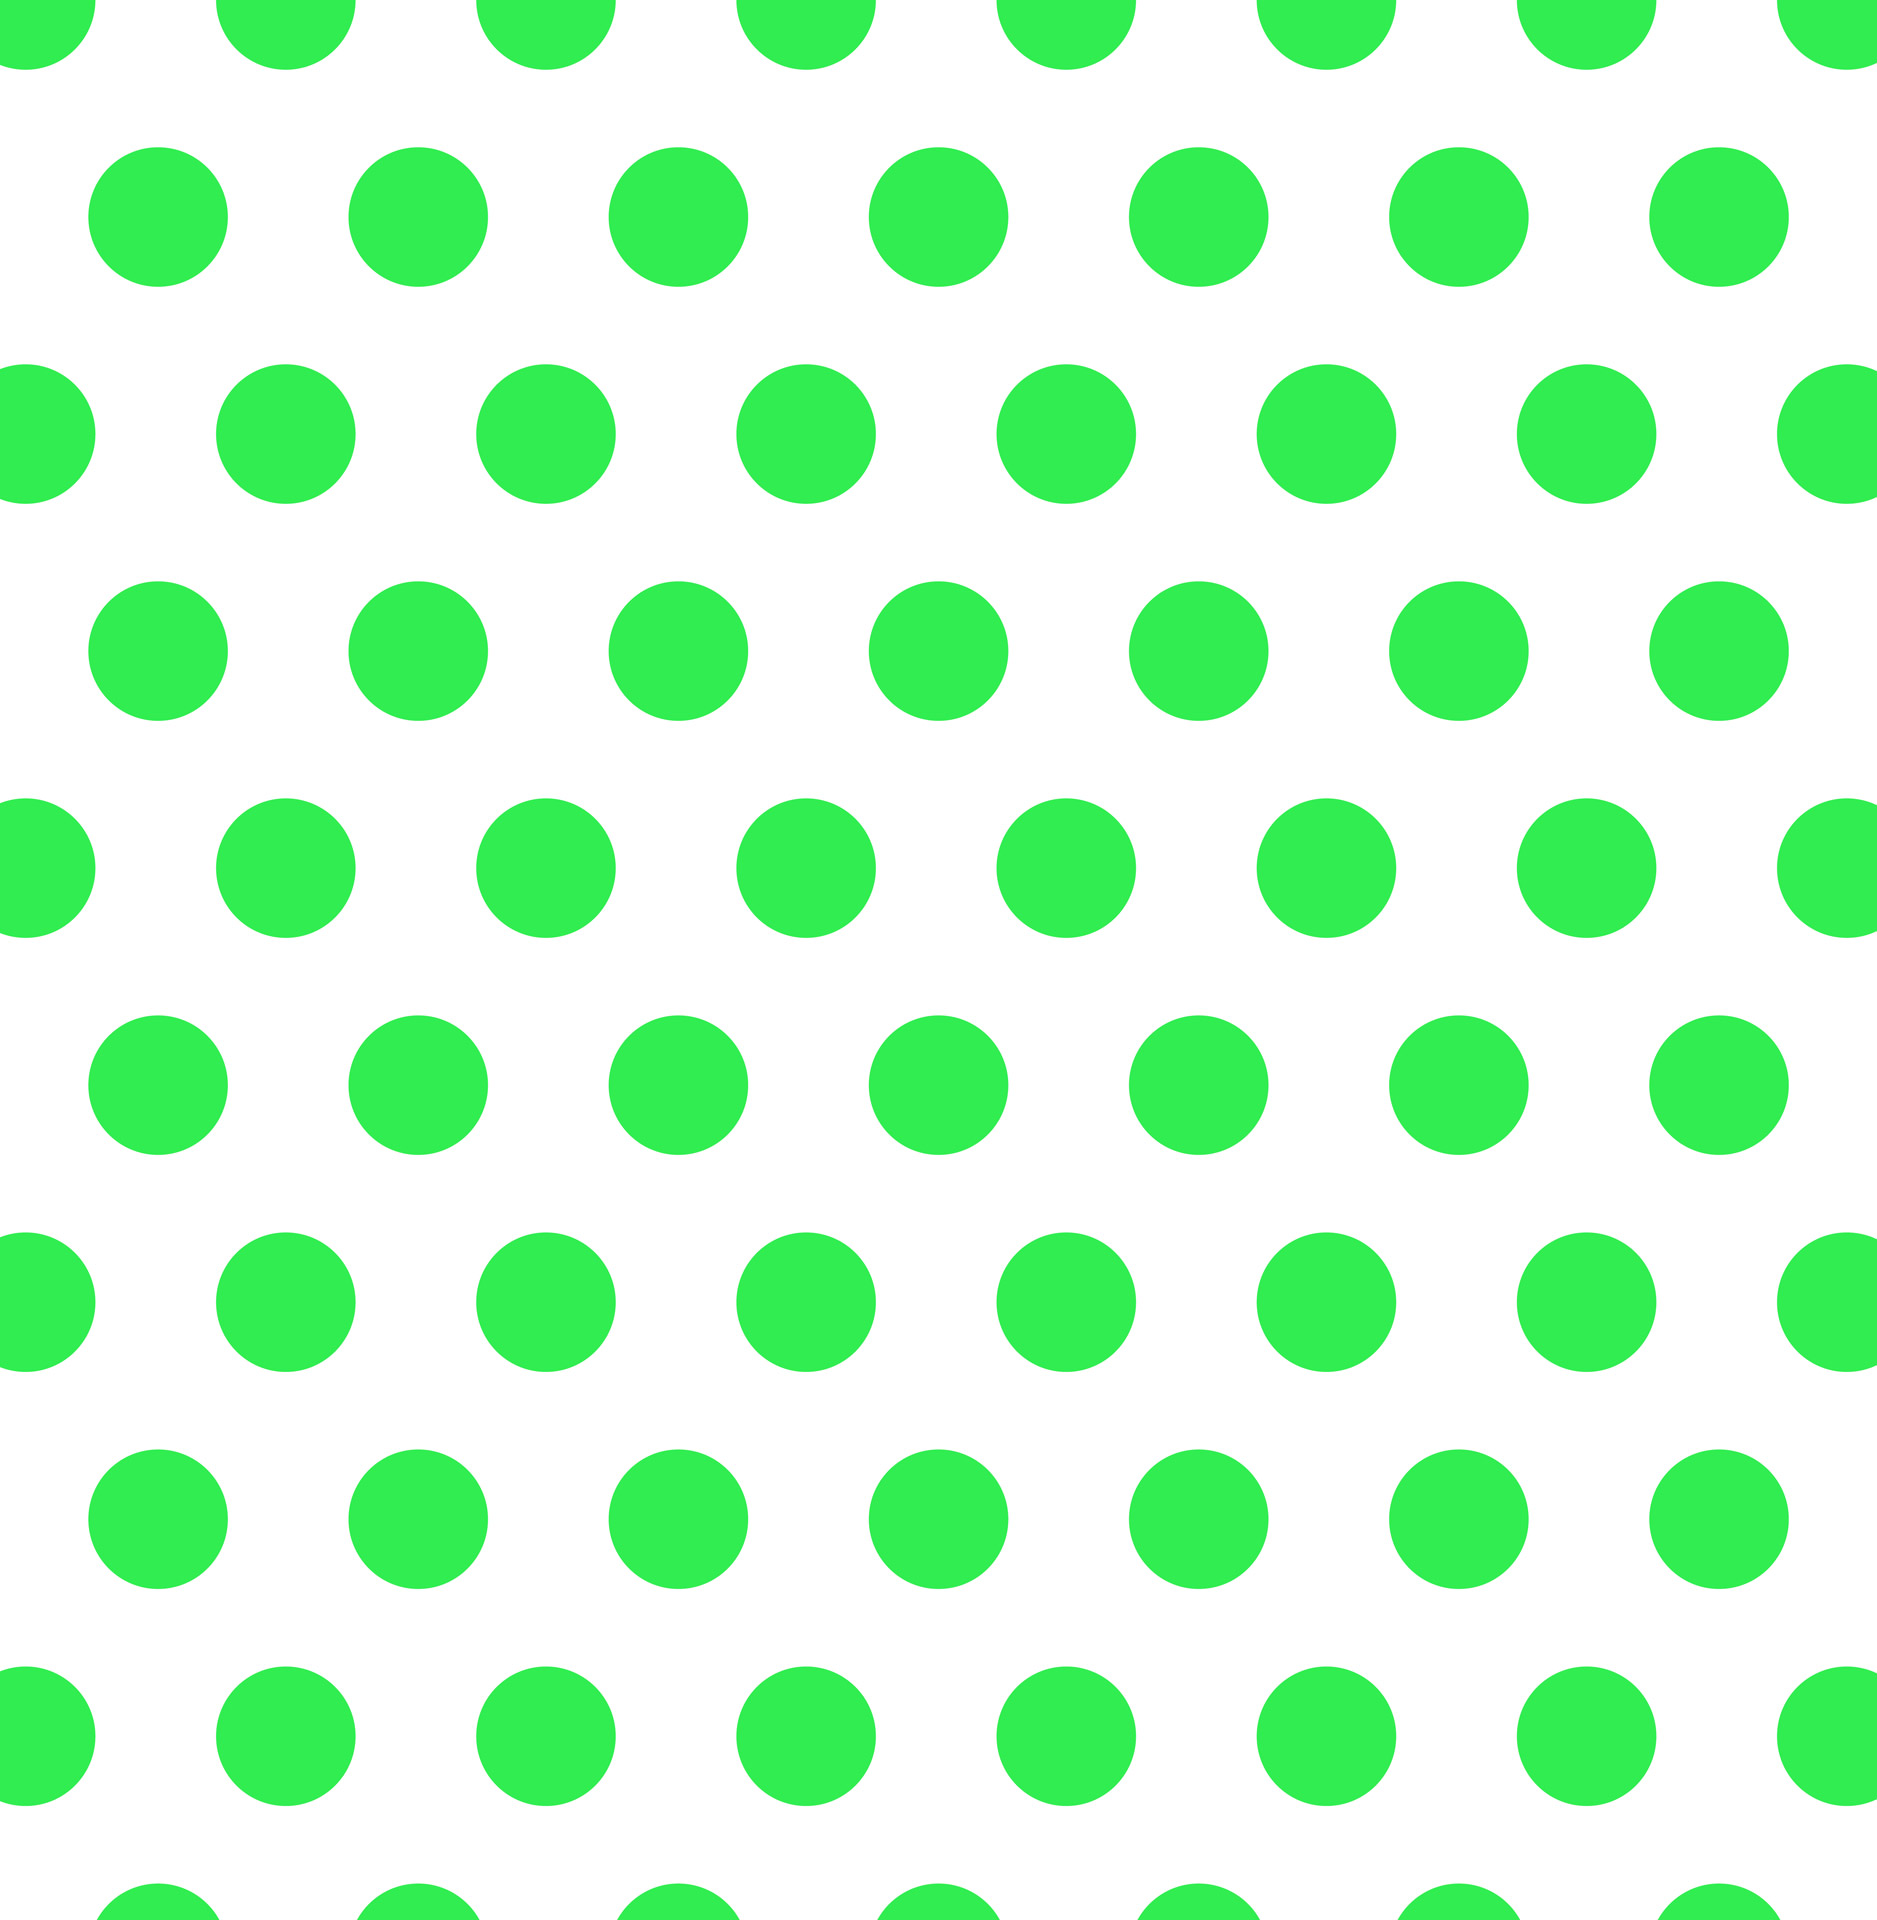 Polka dots,dots,spots,green,bright - free image from 